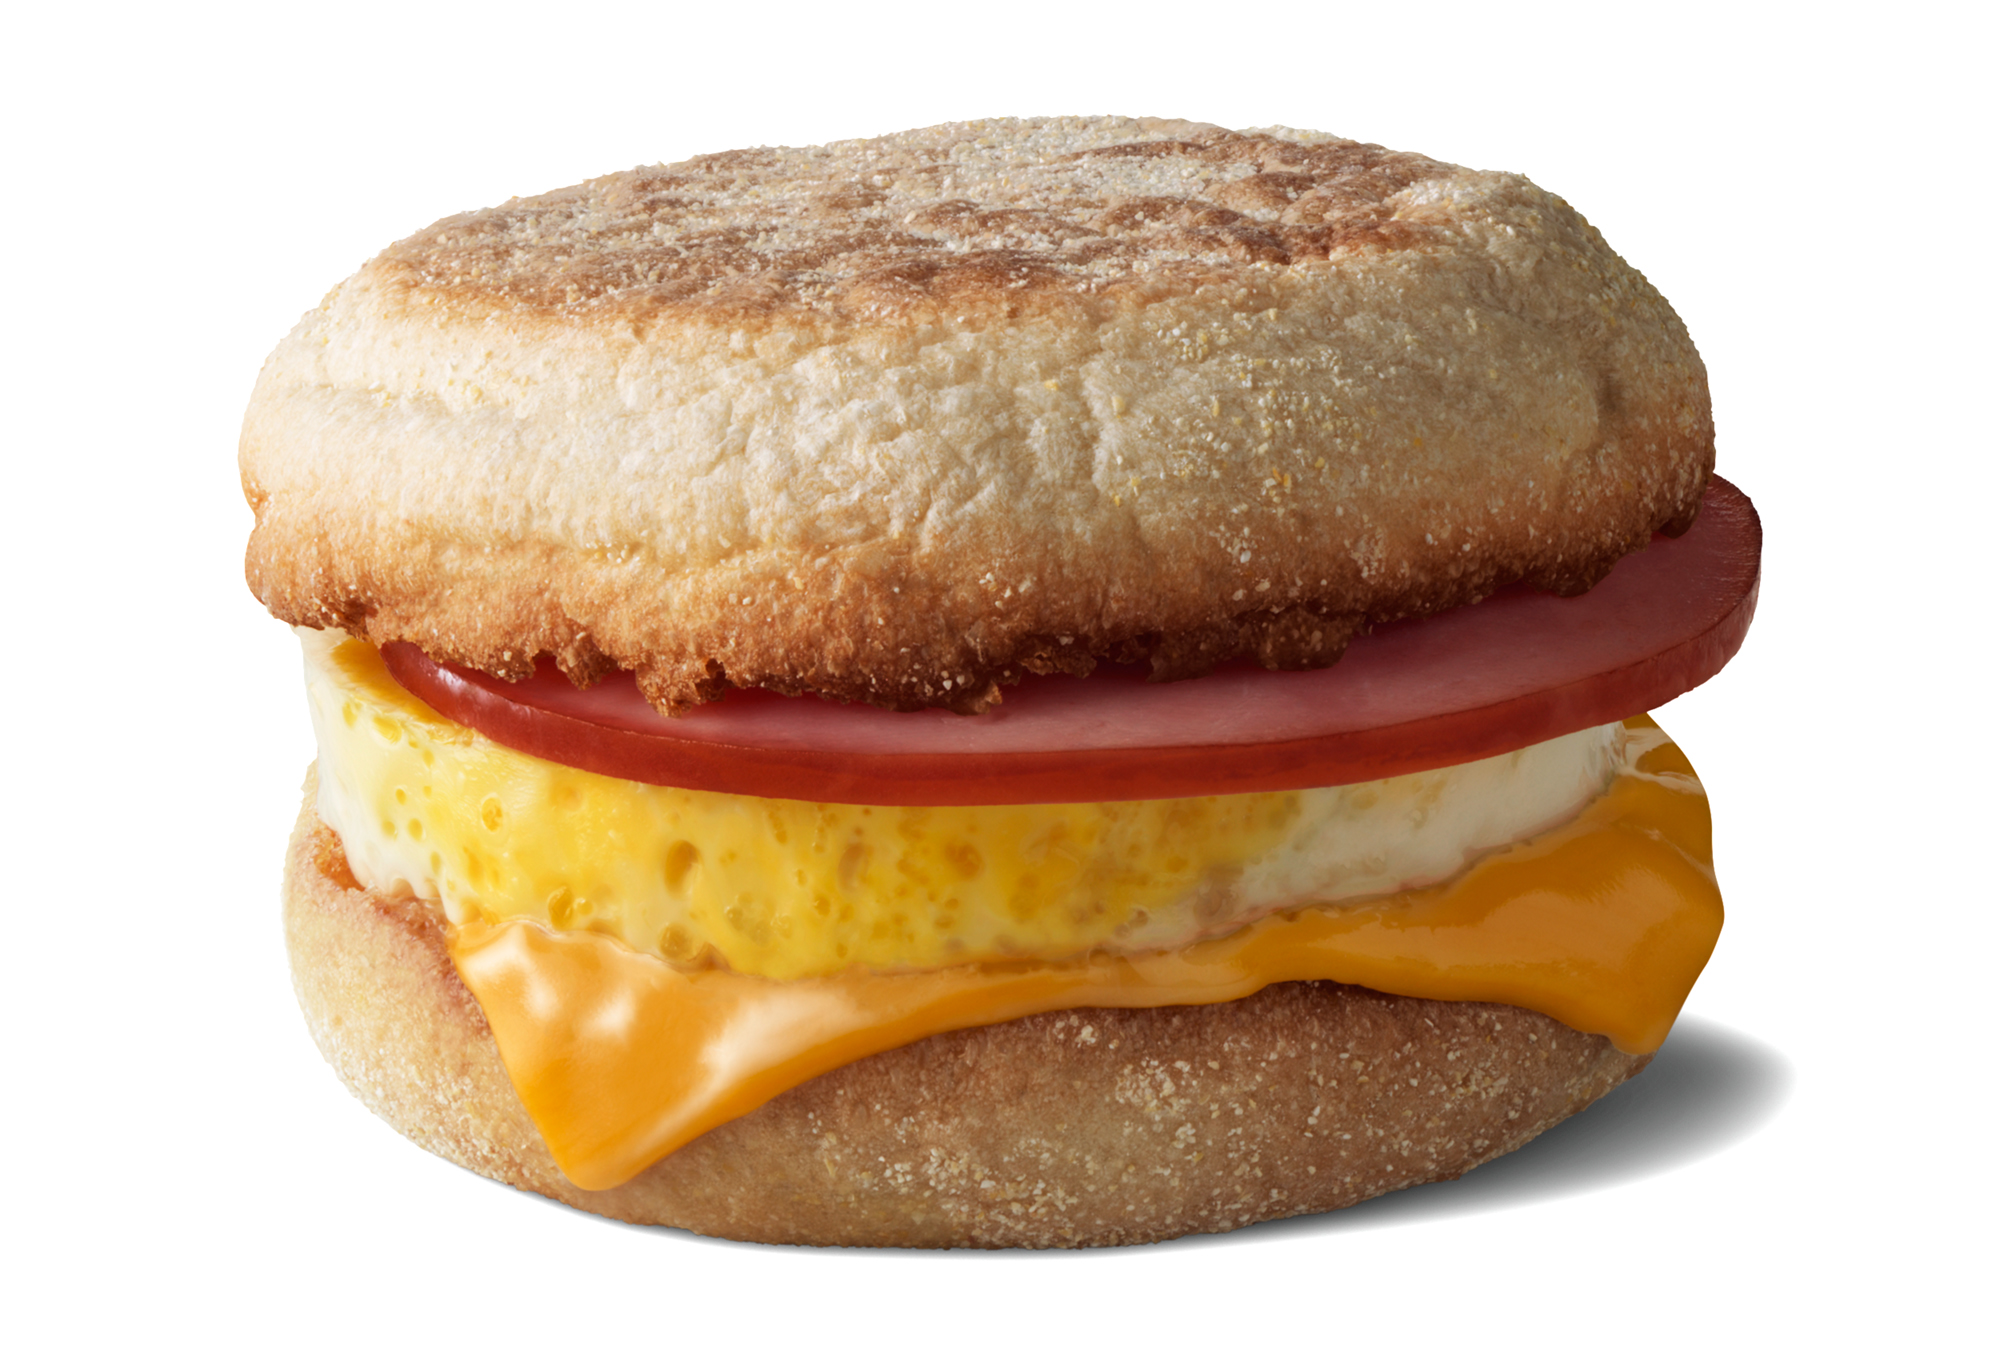 McDonald's Egg McMuffin for breakfast